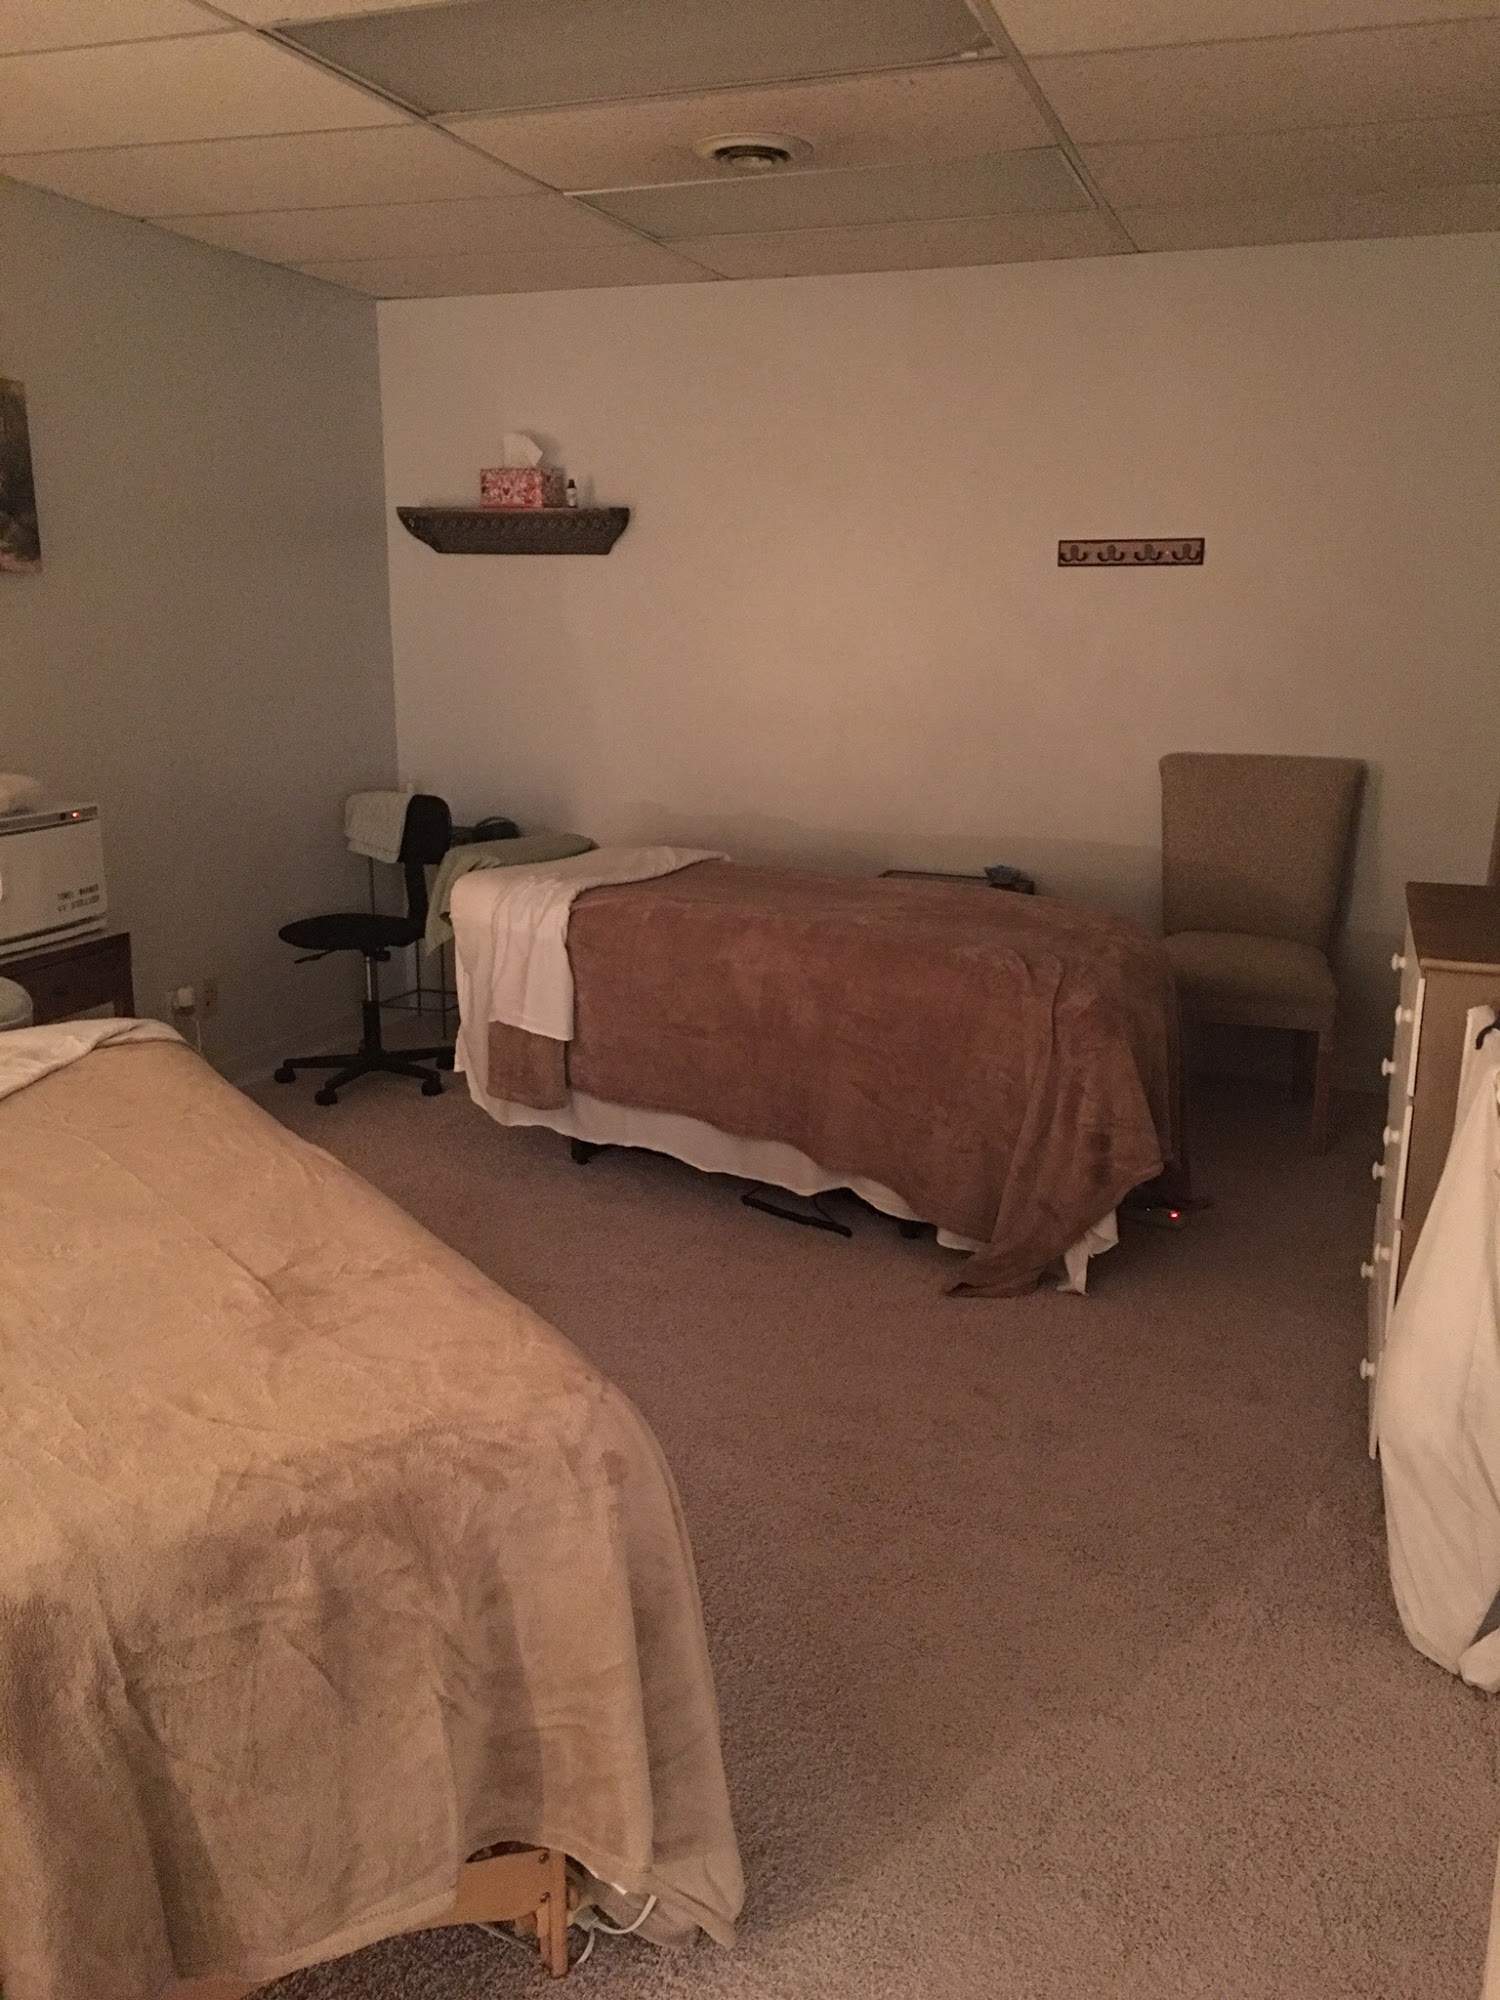 Deanna’s Therapeutic Massage LLc